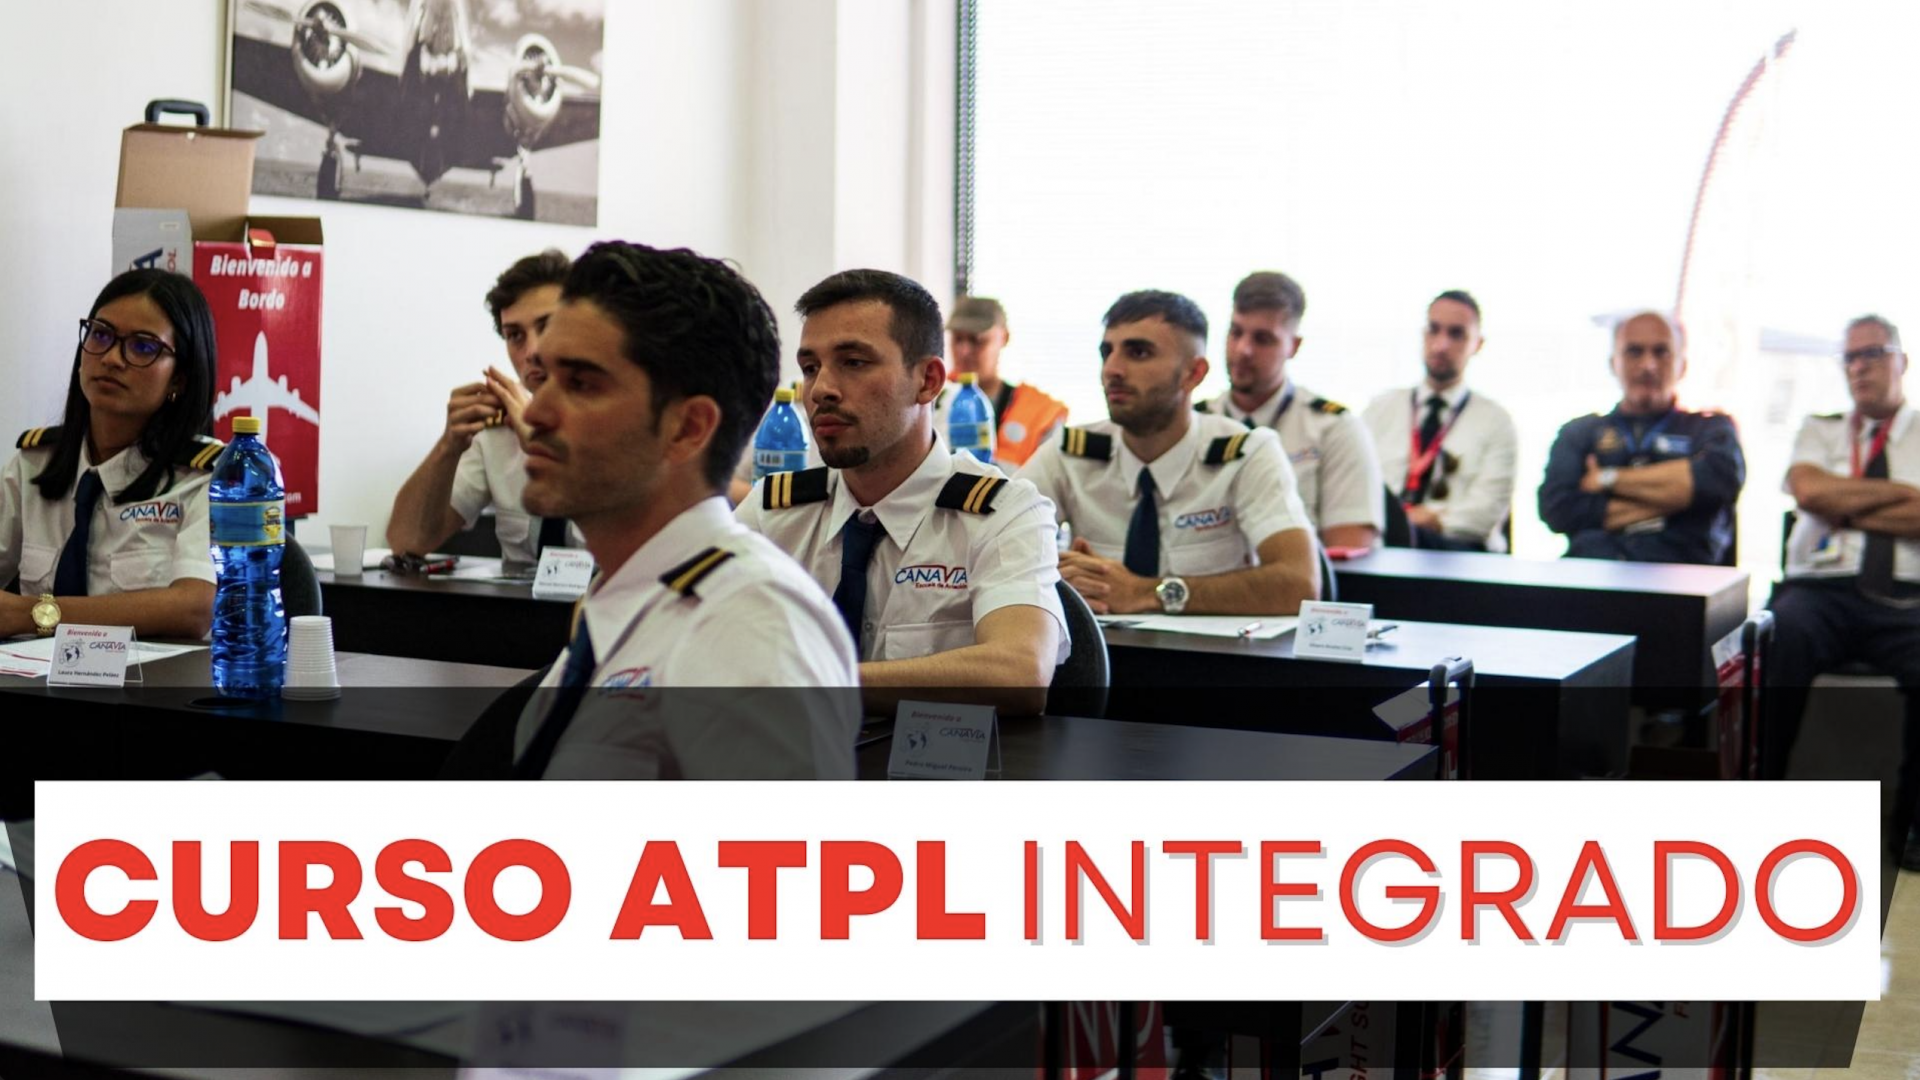 Nueva promoción ATPL Integrado 19 de Septiembre / New Integrated ATPL course 19th September